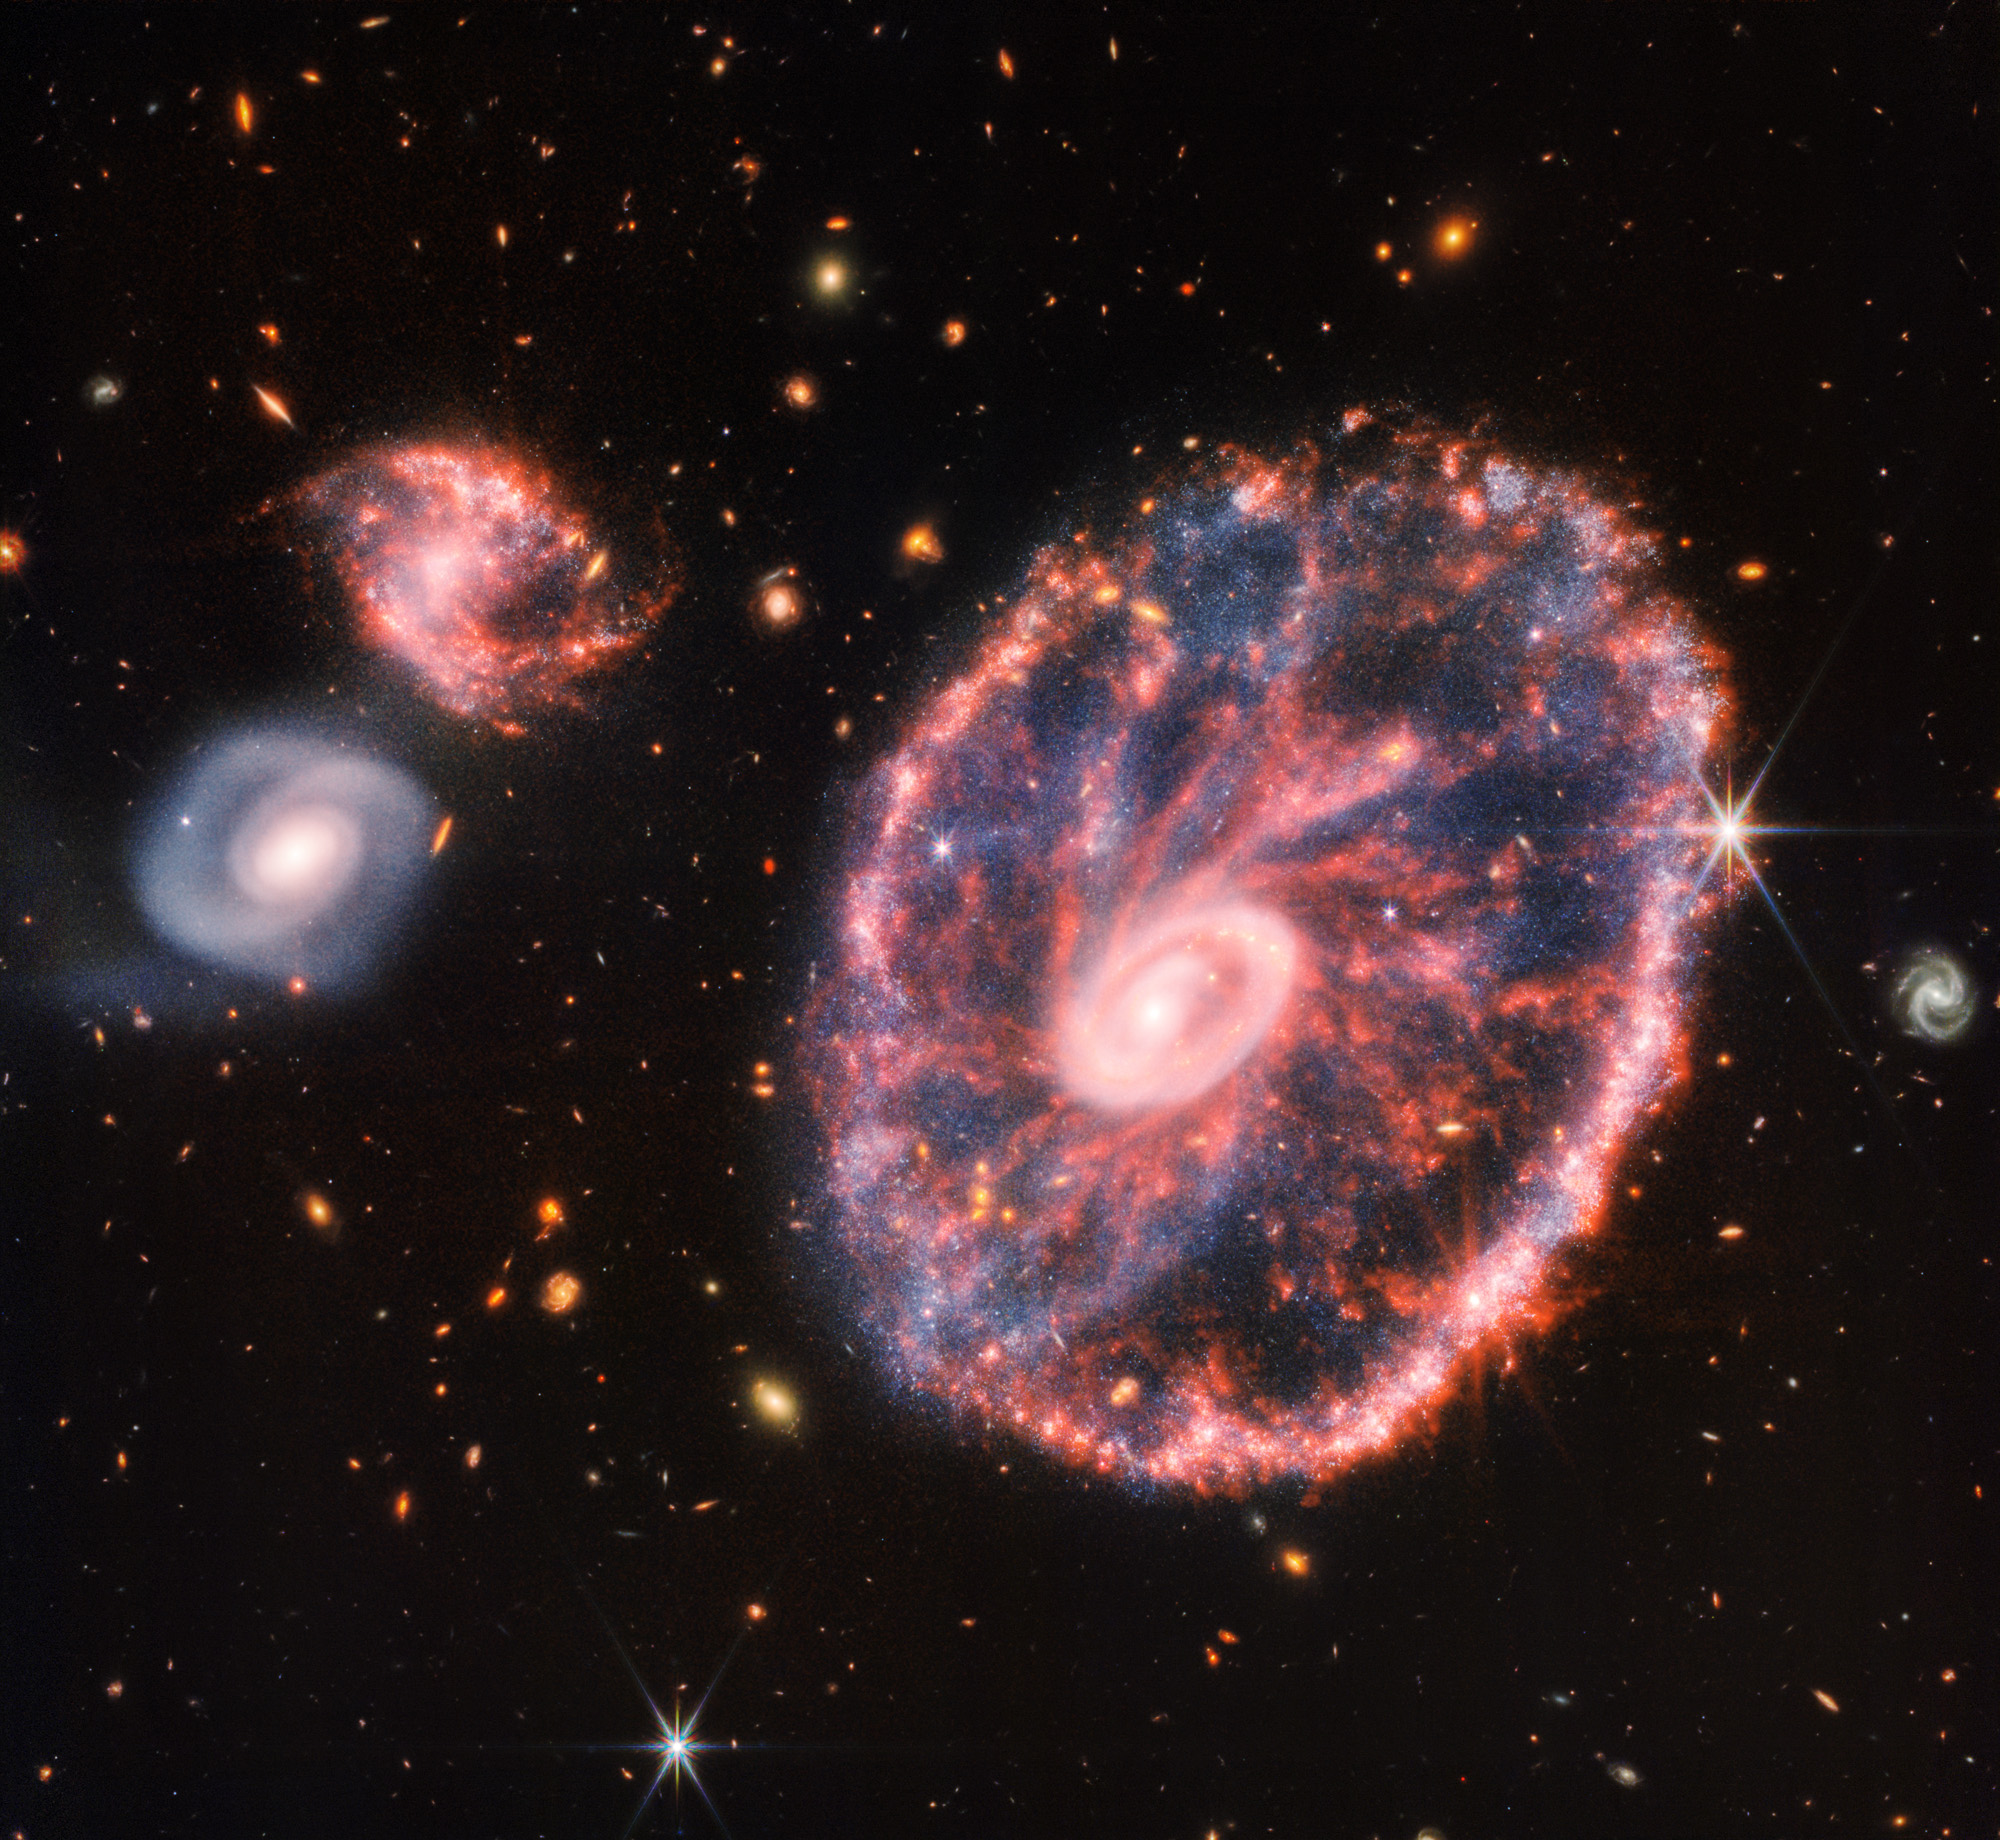 Cartwheel galaxy could help explain ring galaxies